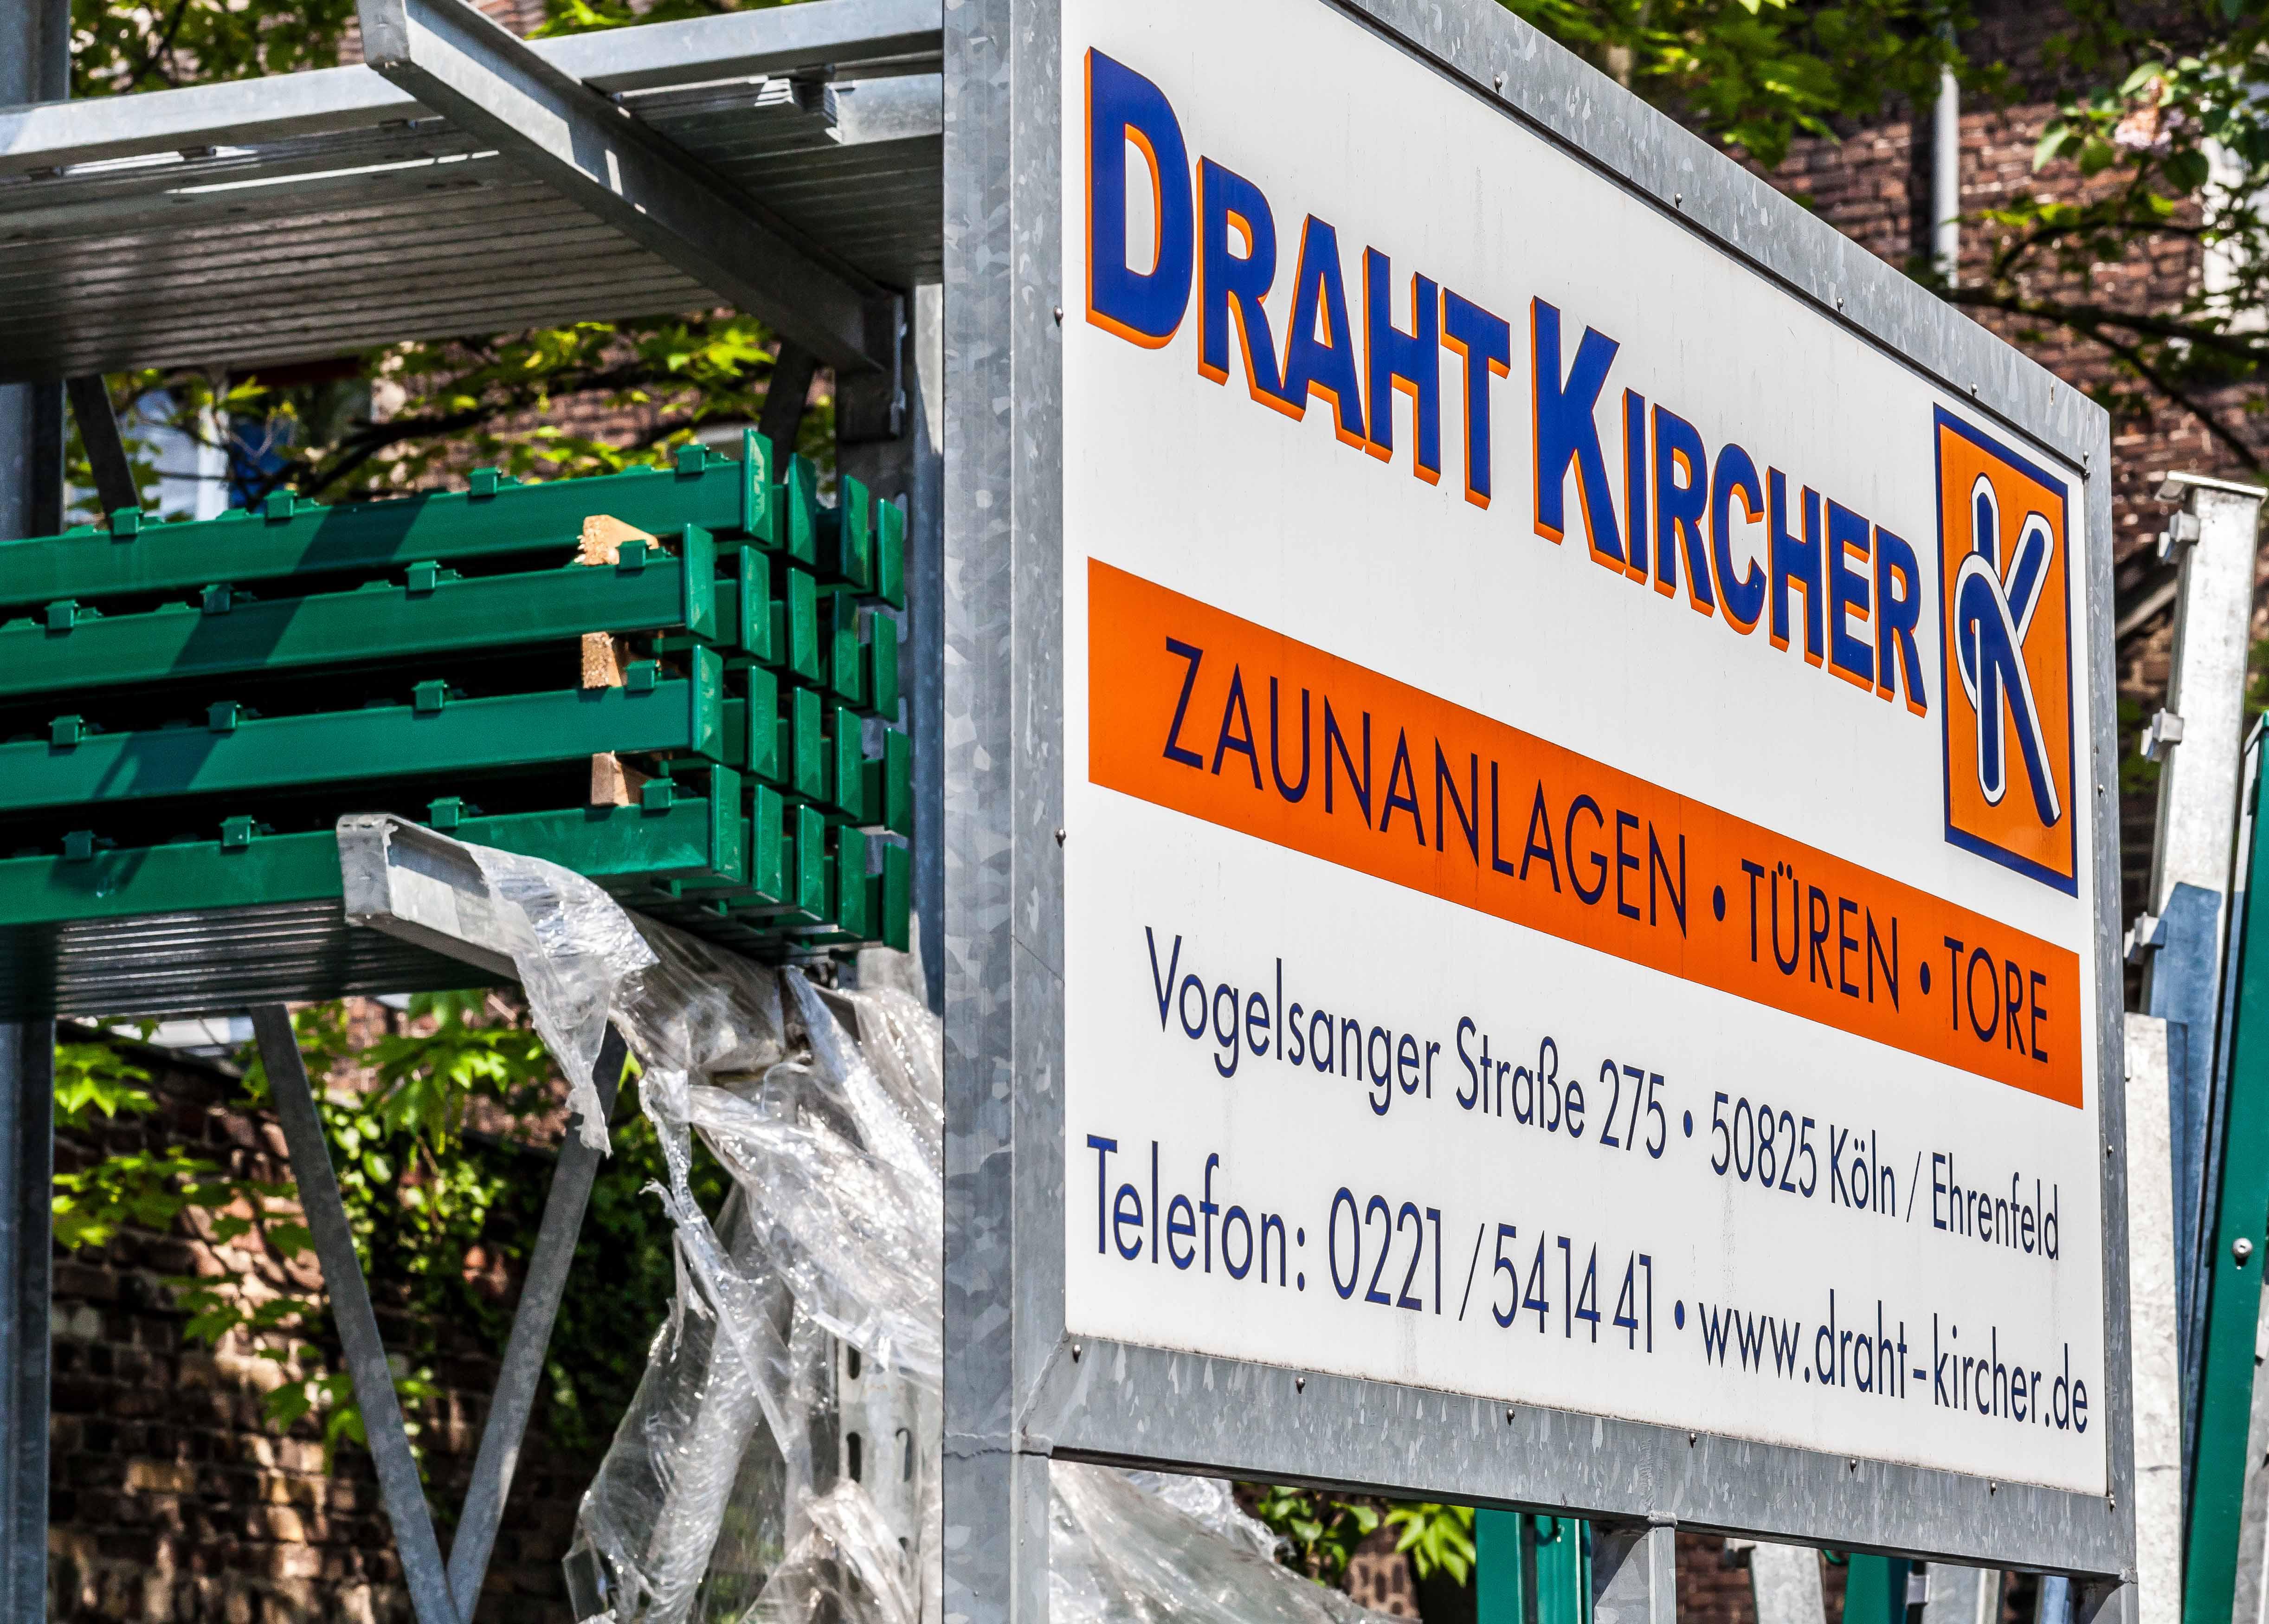 Draht Kircher Zaunbau GmbH